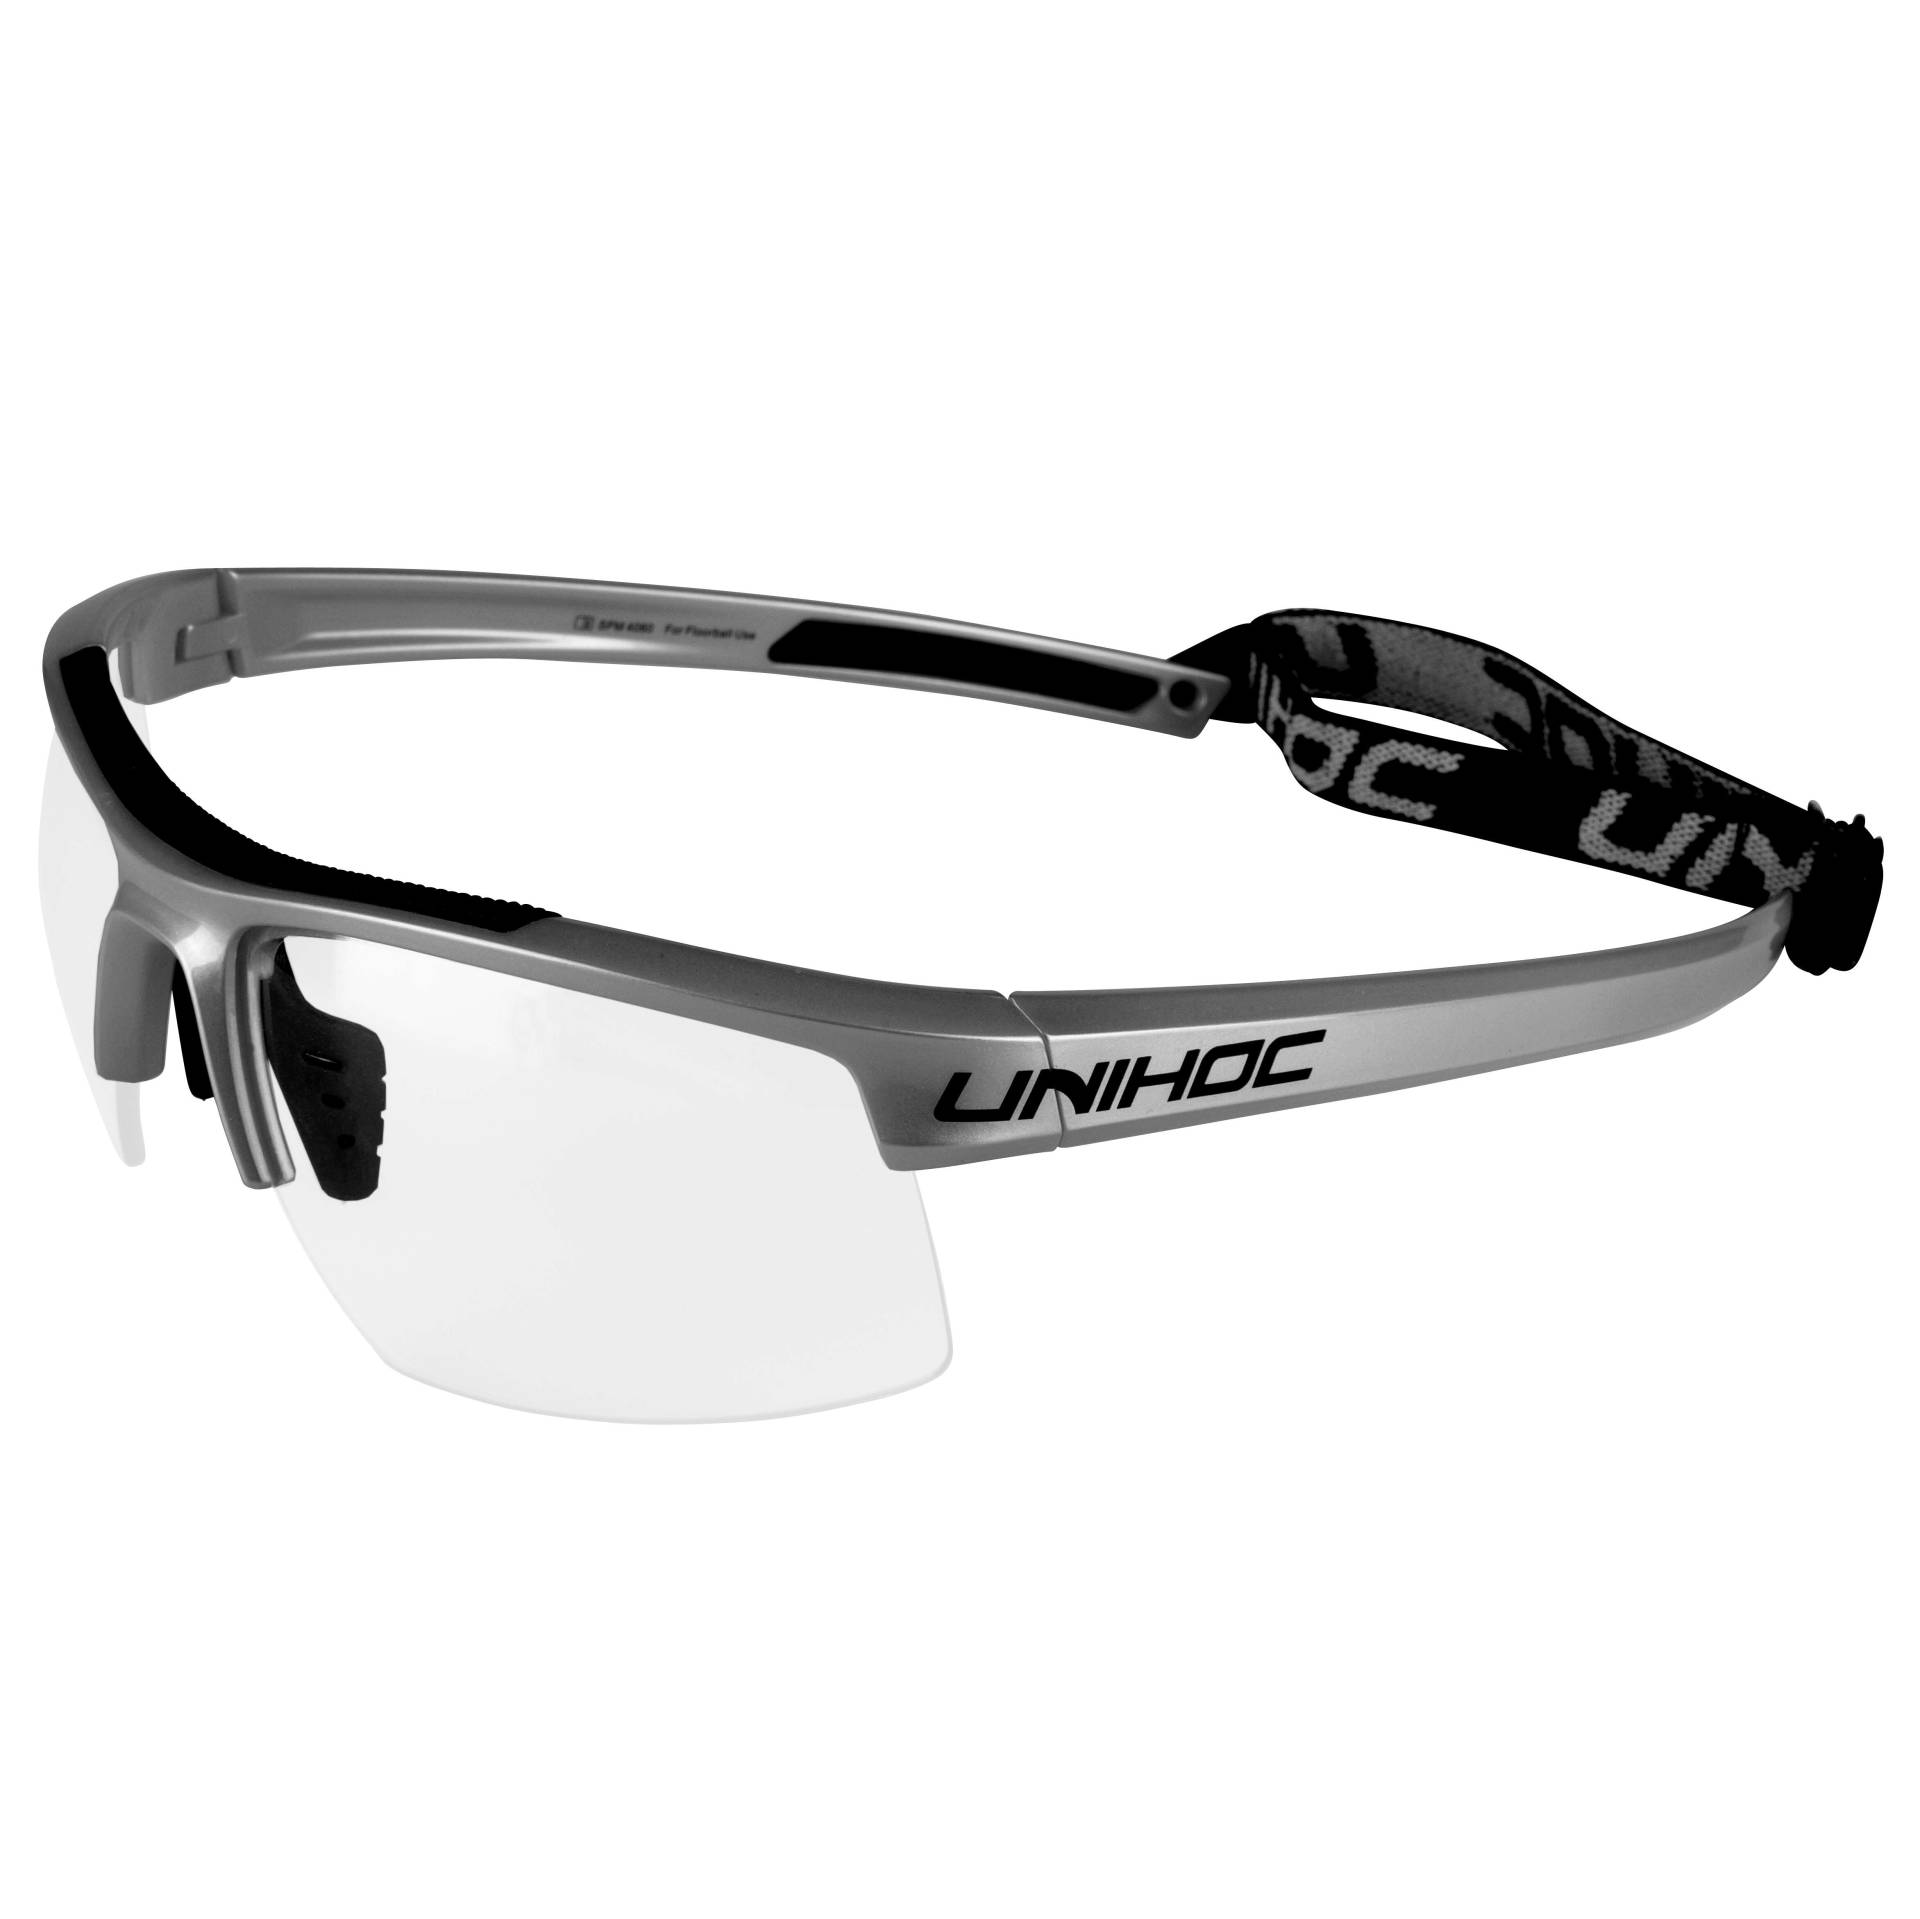 Unihoc Schutzbrille "Energy Senior" von Unihoc